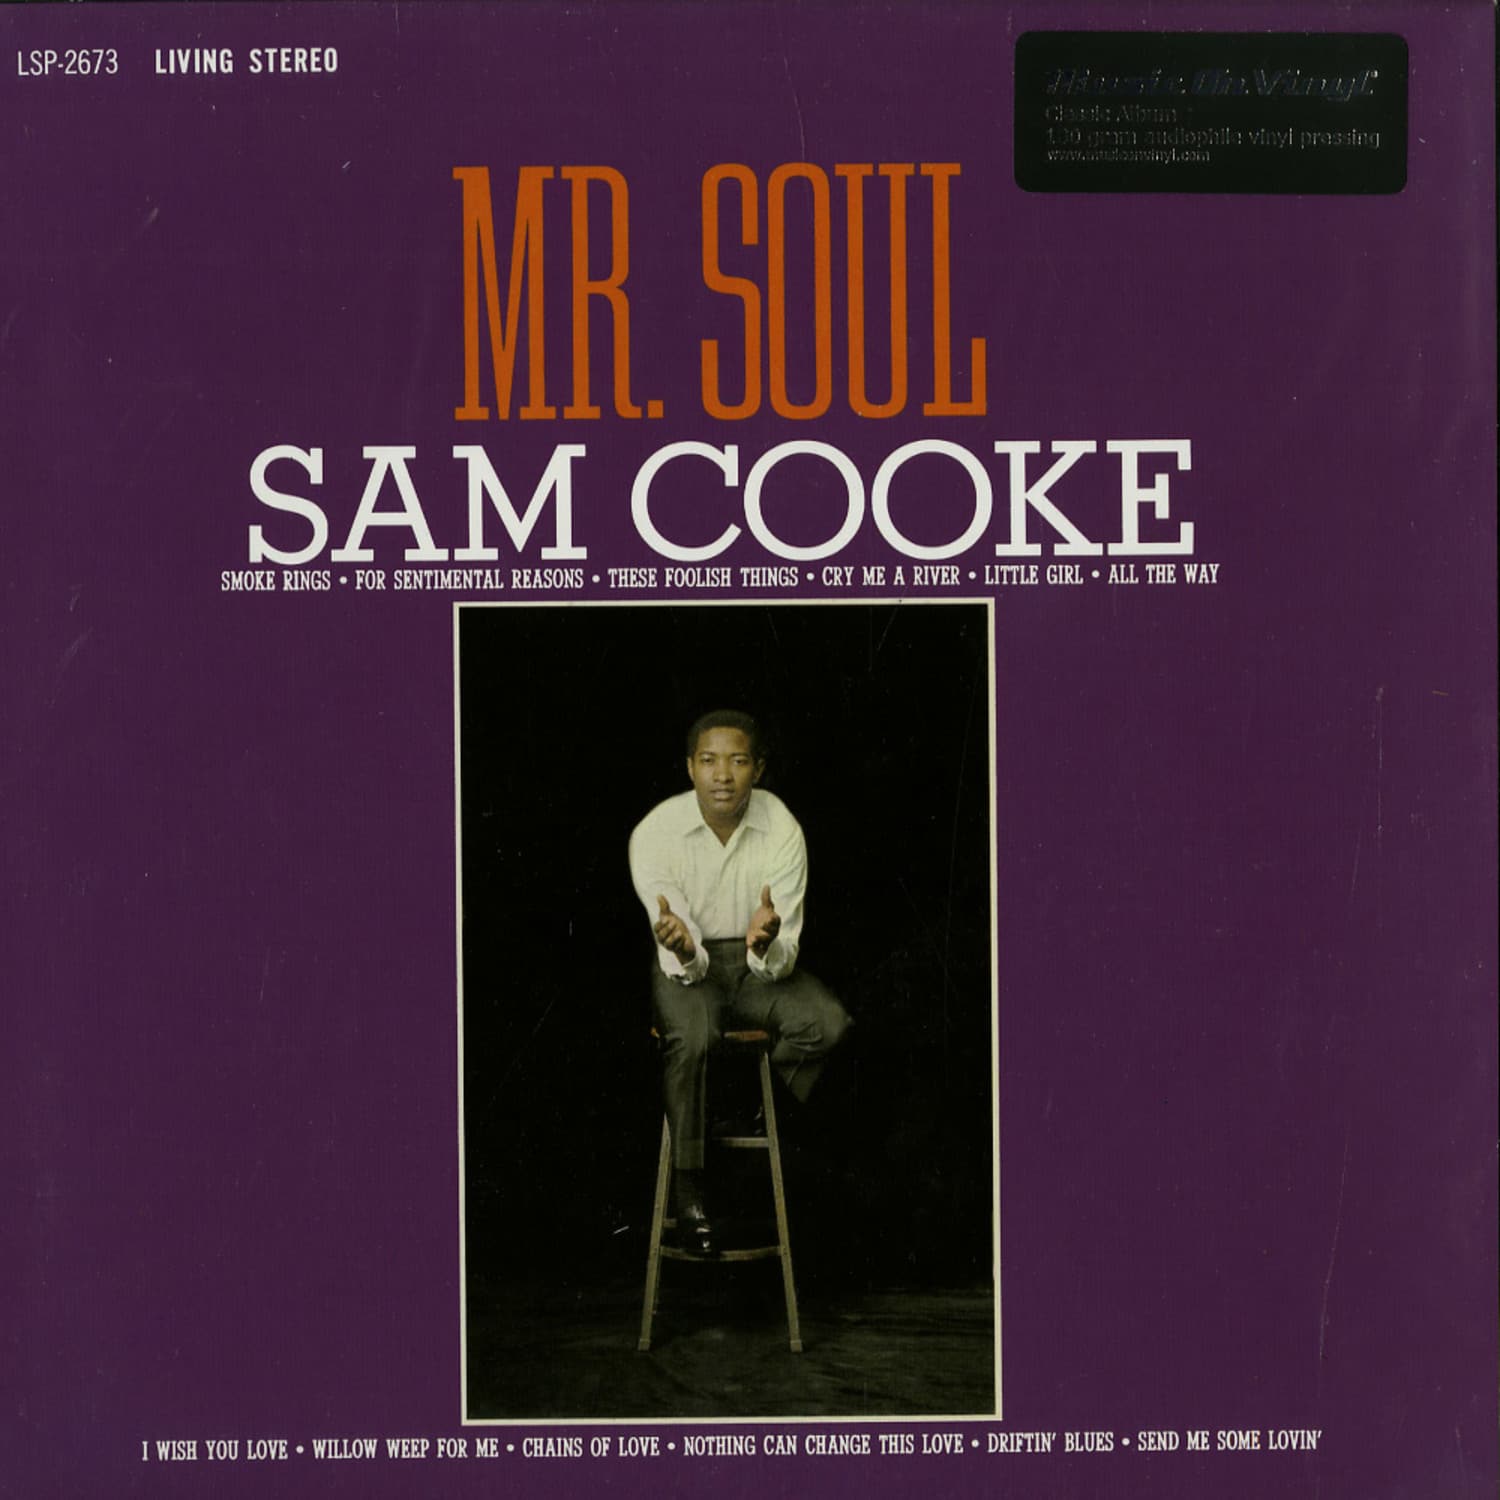 Sam Cooke - MR. SOUL 